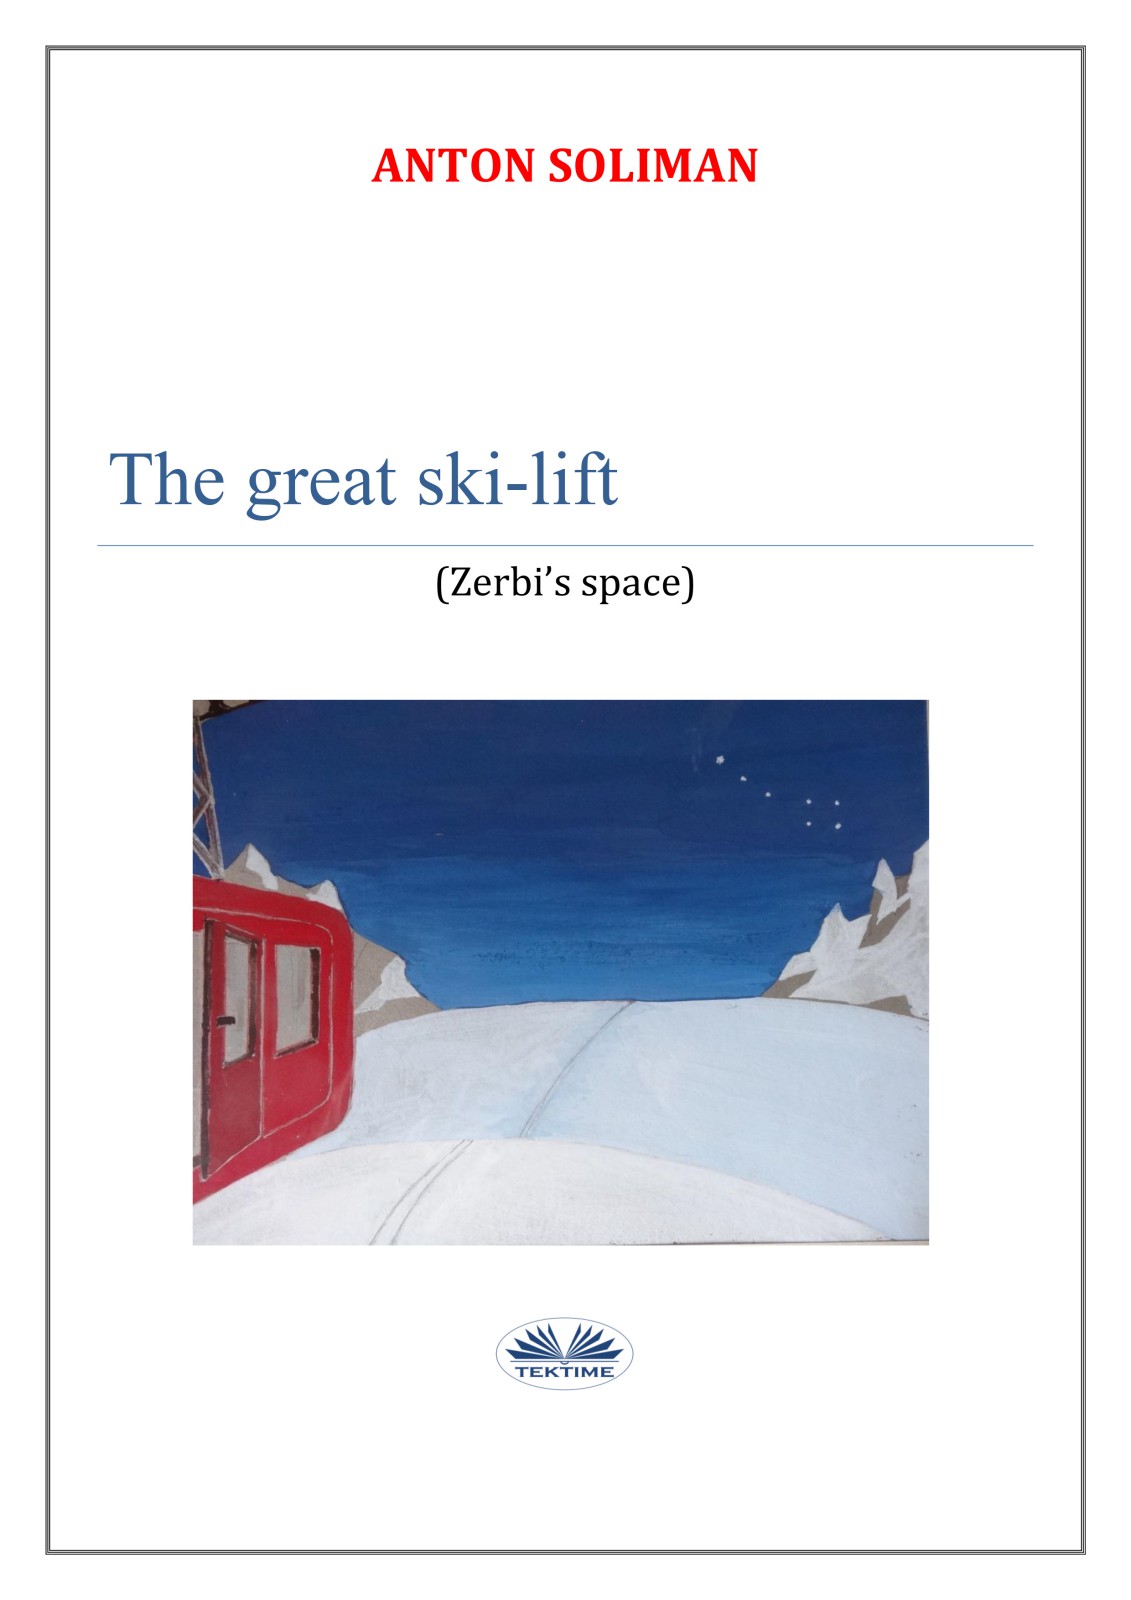 The great ski lift